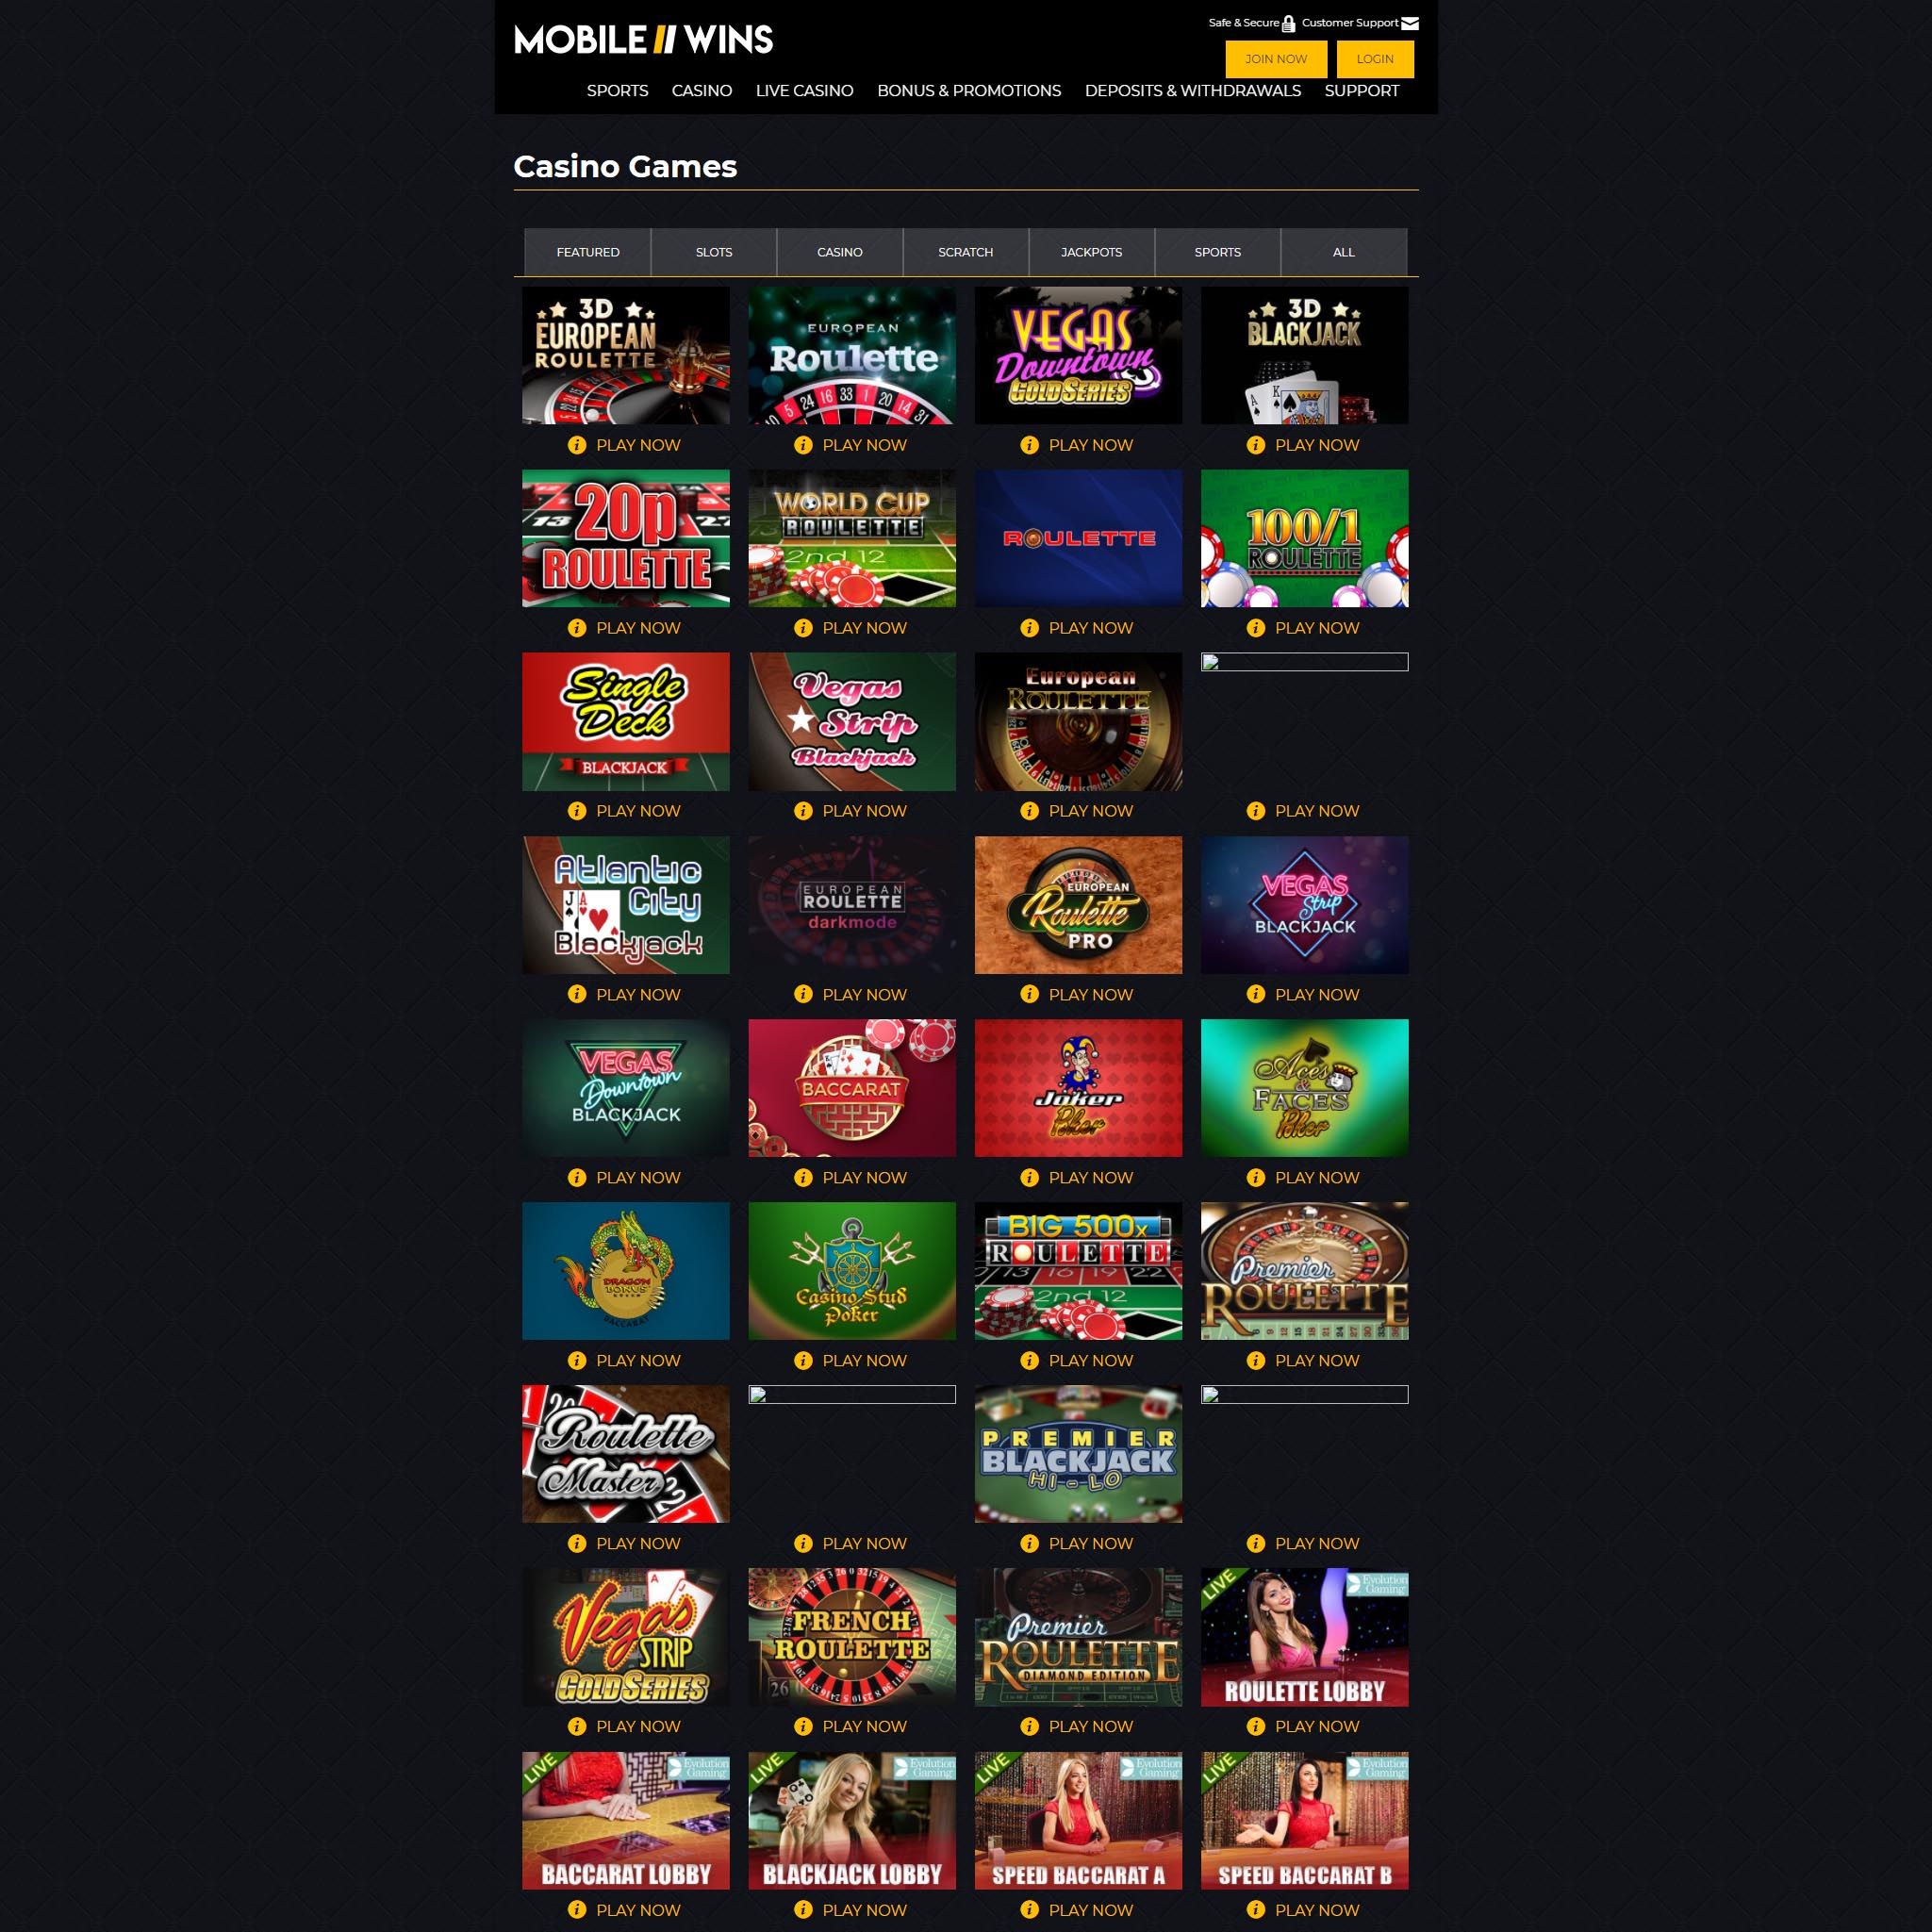 Mobile Wins Casino full games catalogue